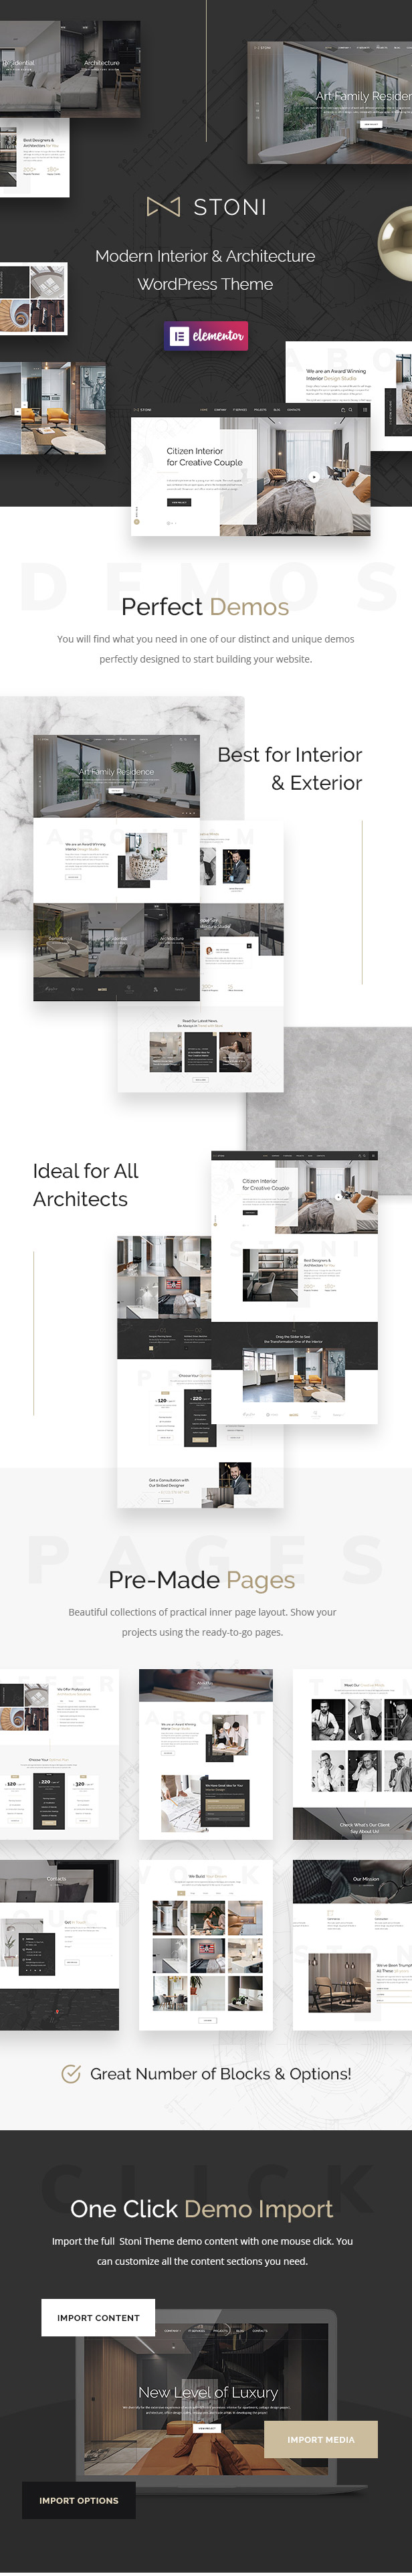 Stoni - Architecture & Interior Design Agency WordPress Theme - 2